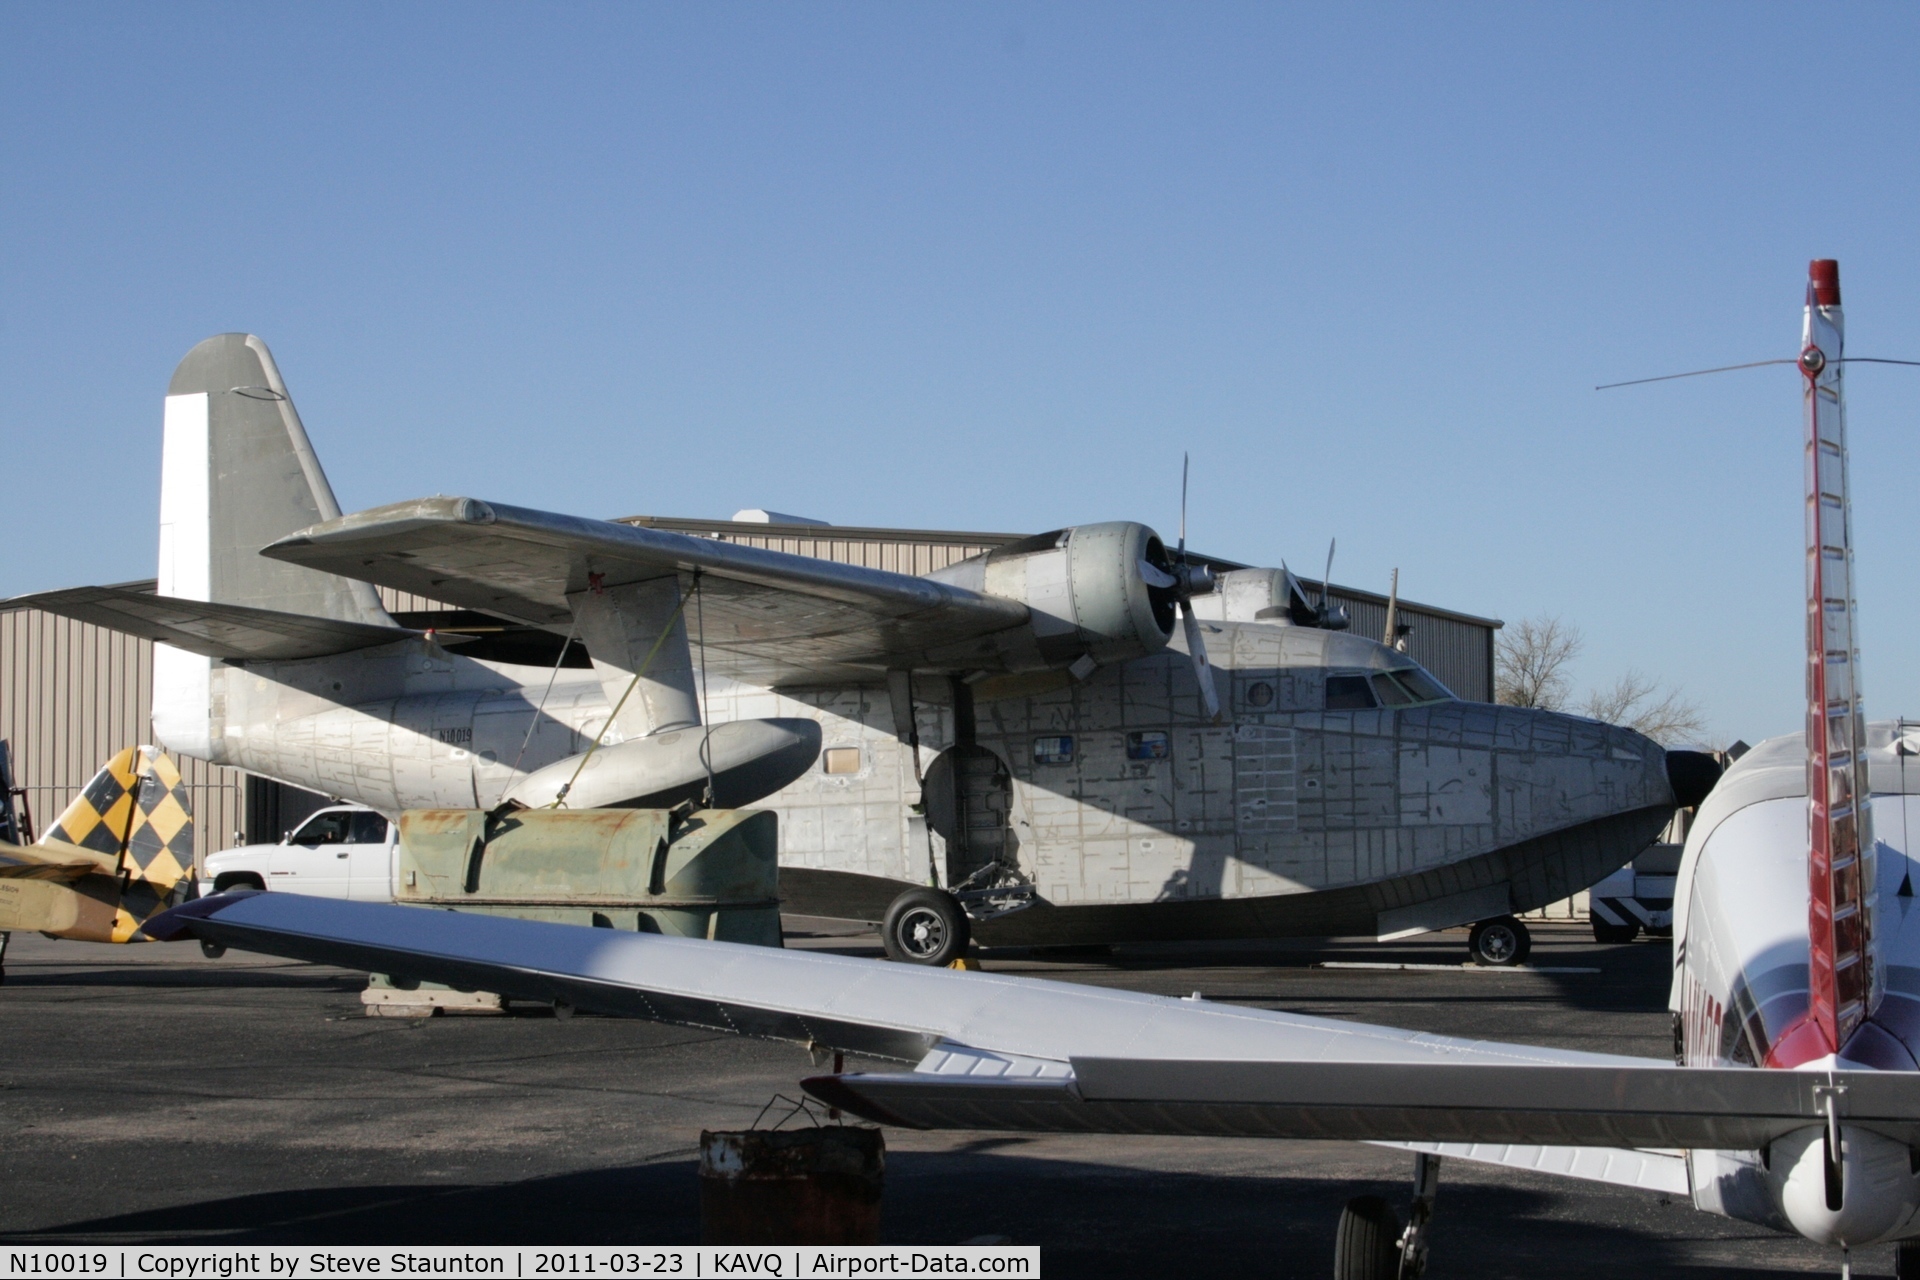 N10019, 1951 Grumman HU-16E Albatross C/N G 92/40B, Taken at Avra Valley Airport, in March 2011 whilst on an Aeroprint Aviation tour